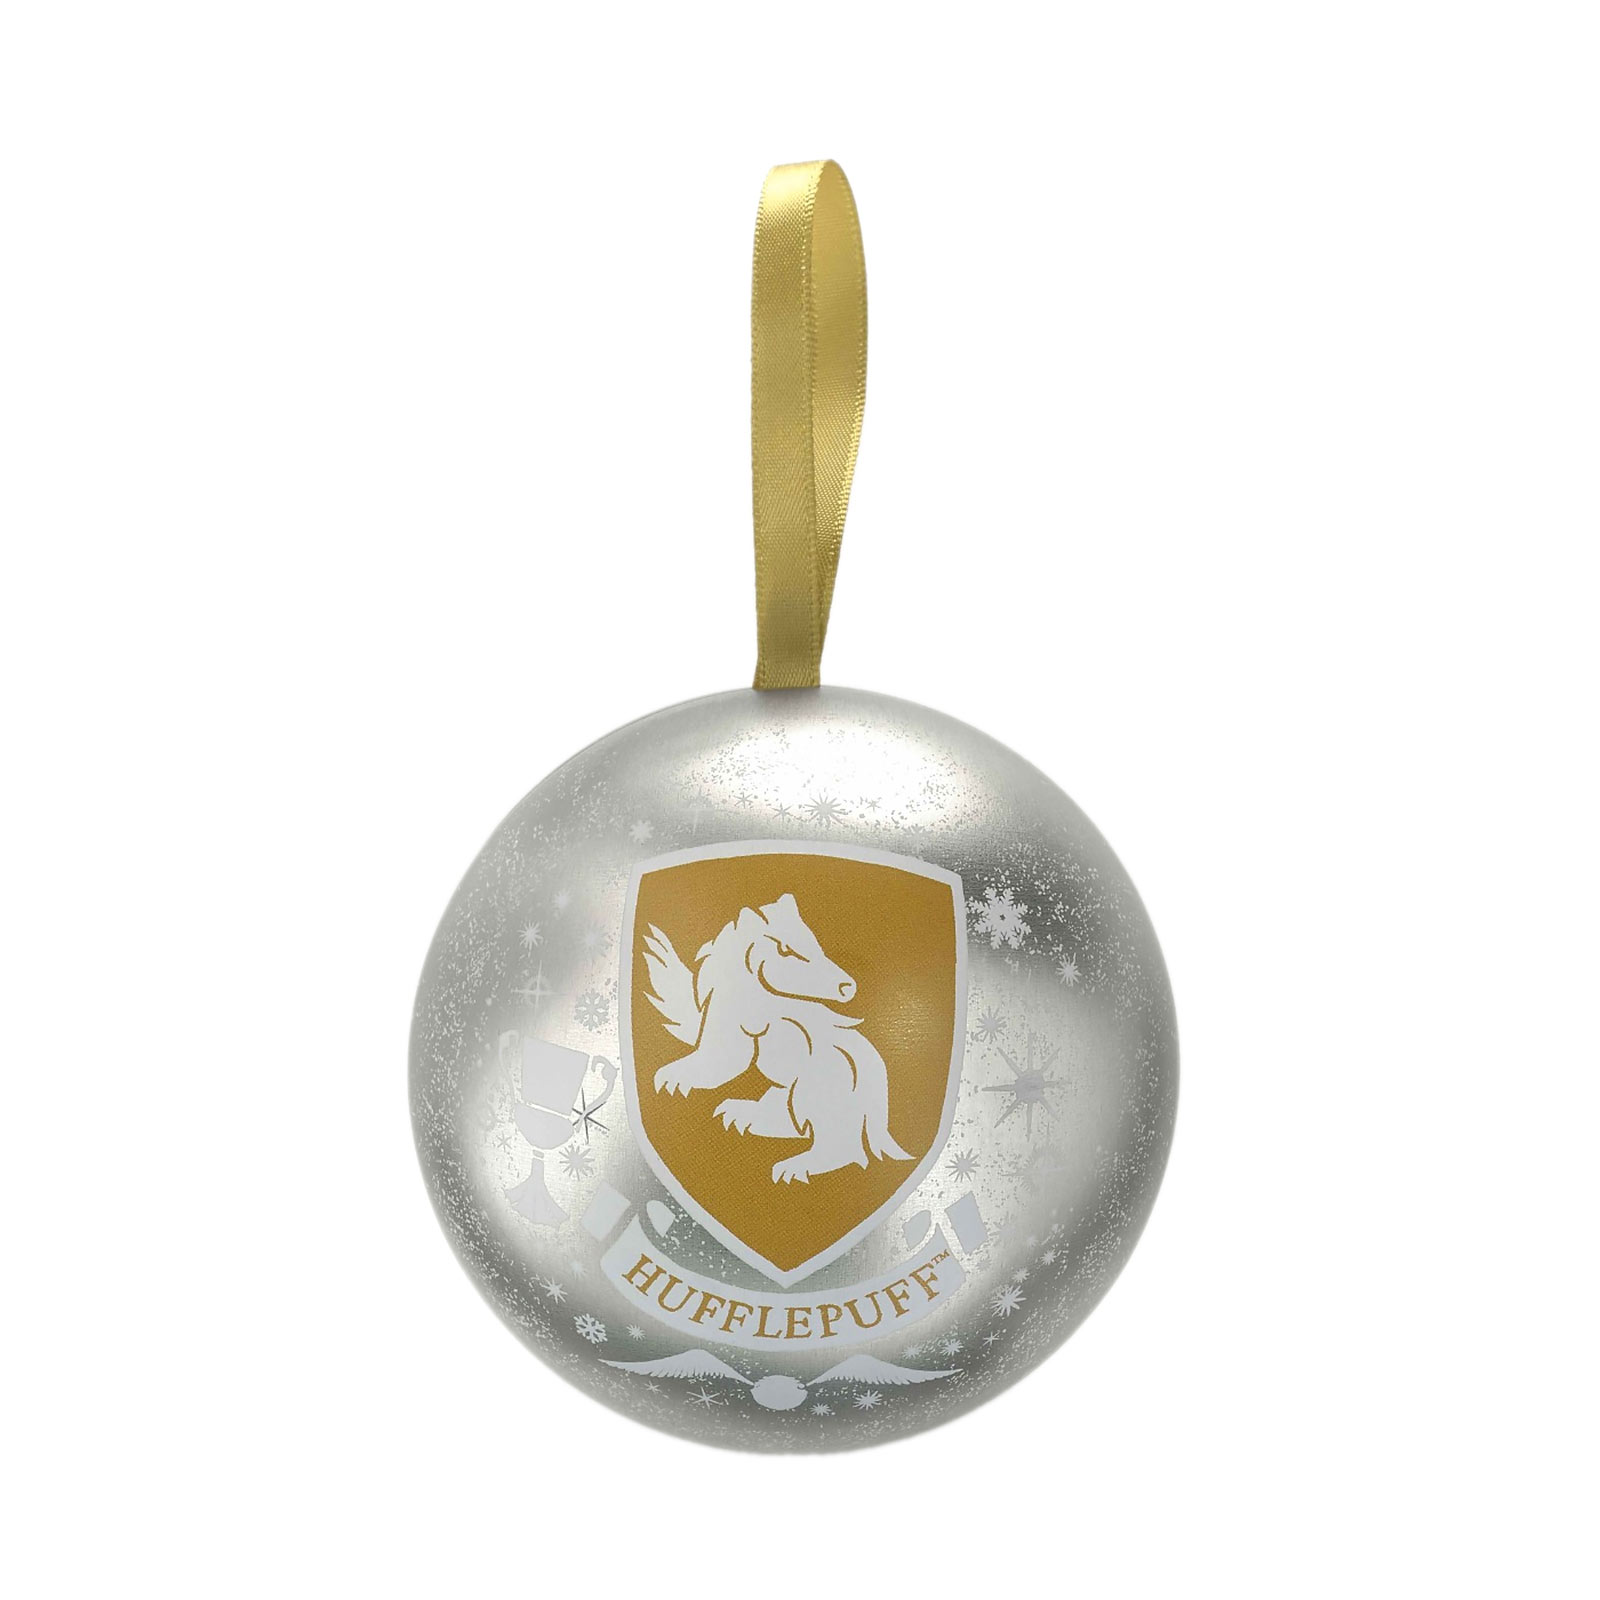 Harry Potter - Weihnachtskugel mit Hufflepuff Wappen Kette